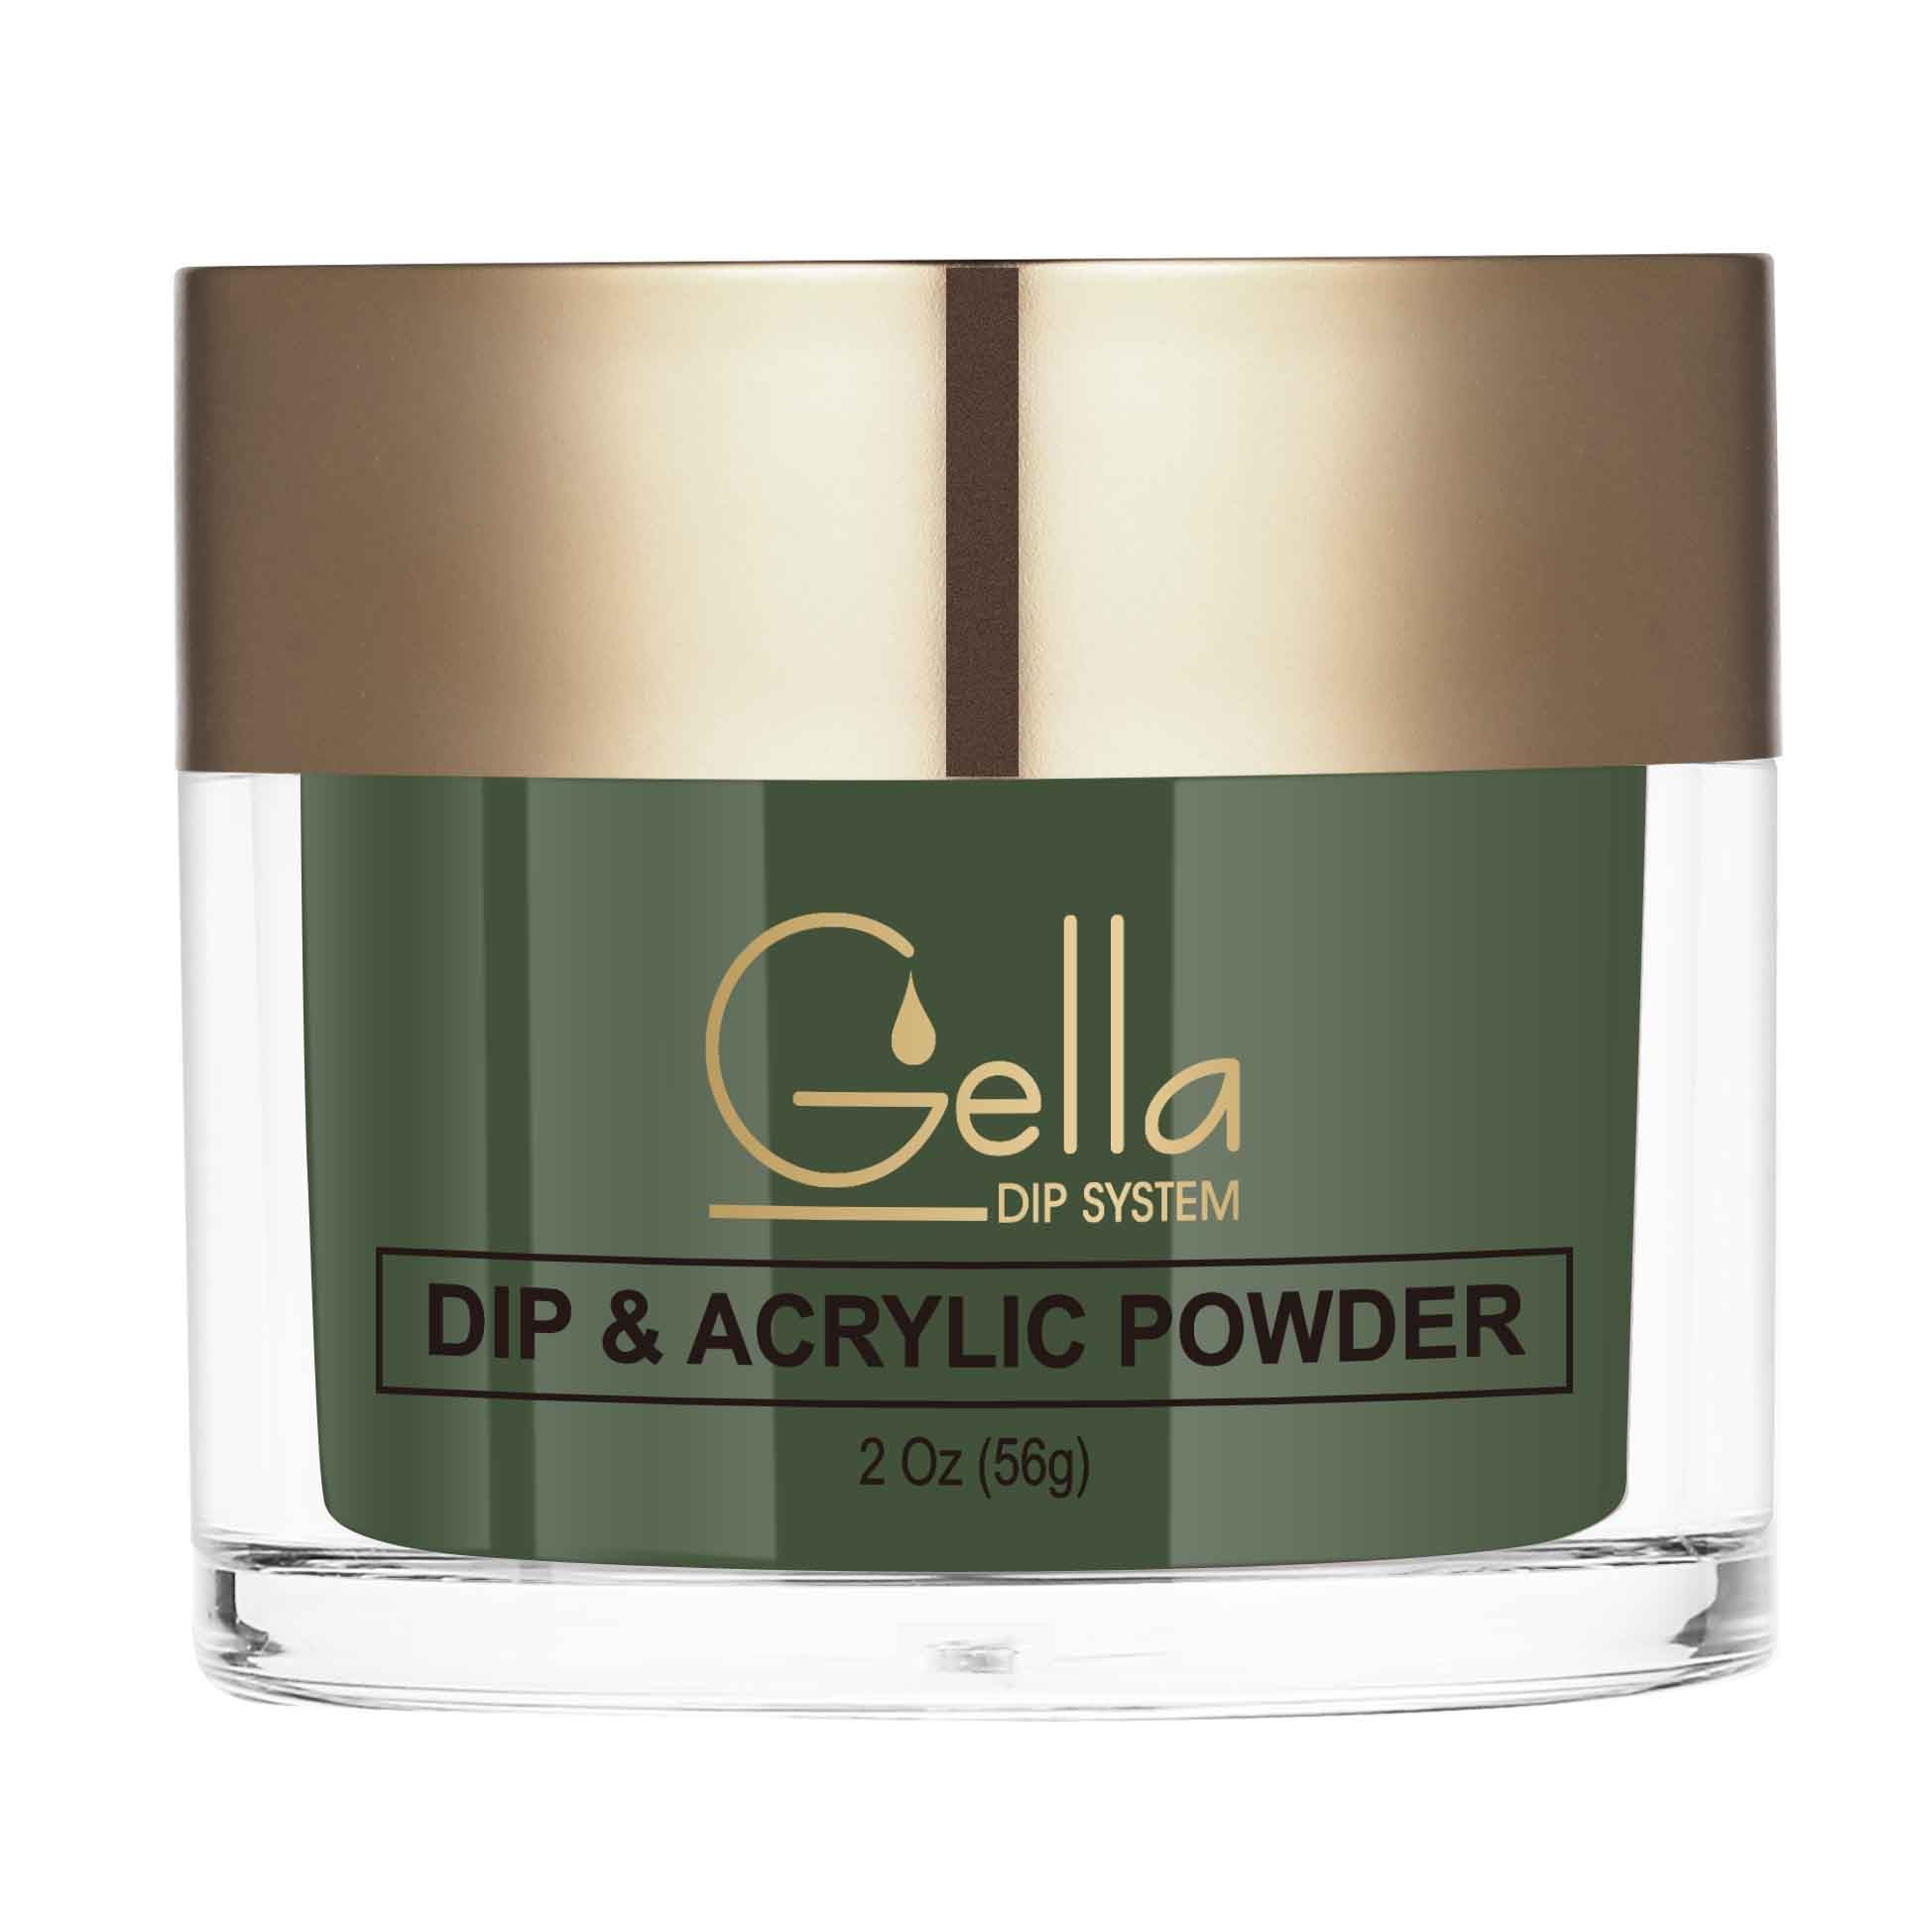 Dip & Acrylic Powder - D250 Green & Glamorous